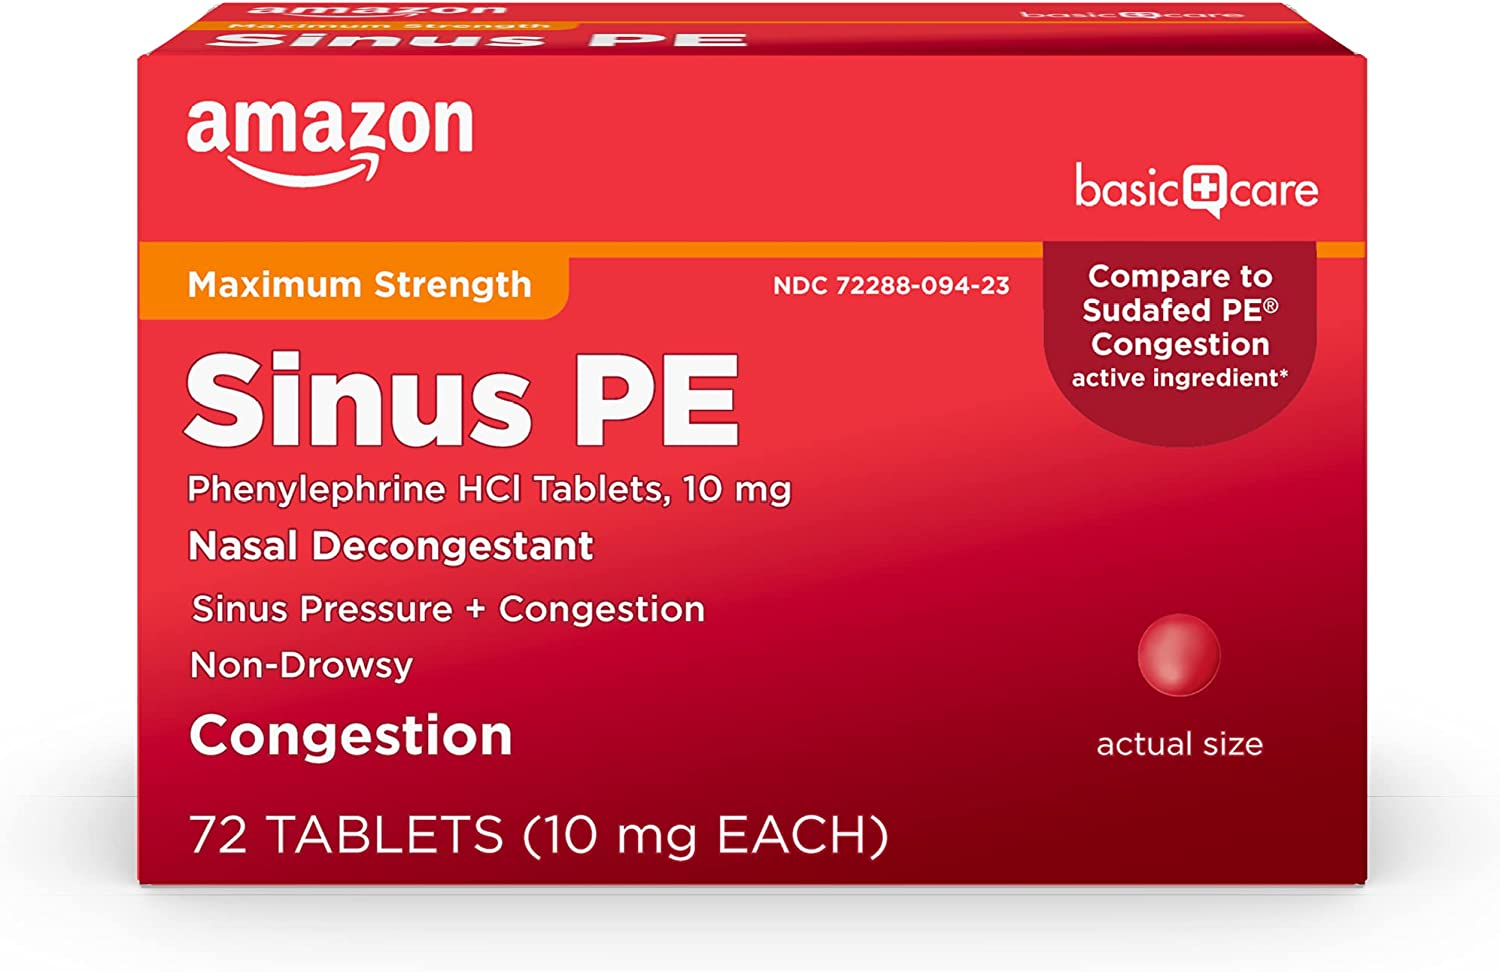 72 Ct Amazon Basic Care Maximum Strength Nasal Decongestant PE - Phenylephrine HCl (10 mg Tablets) $5.60